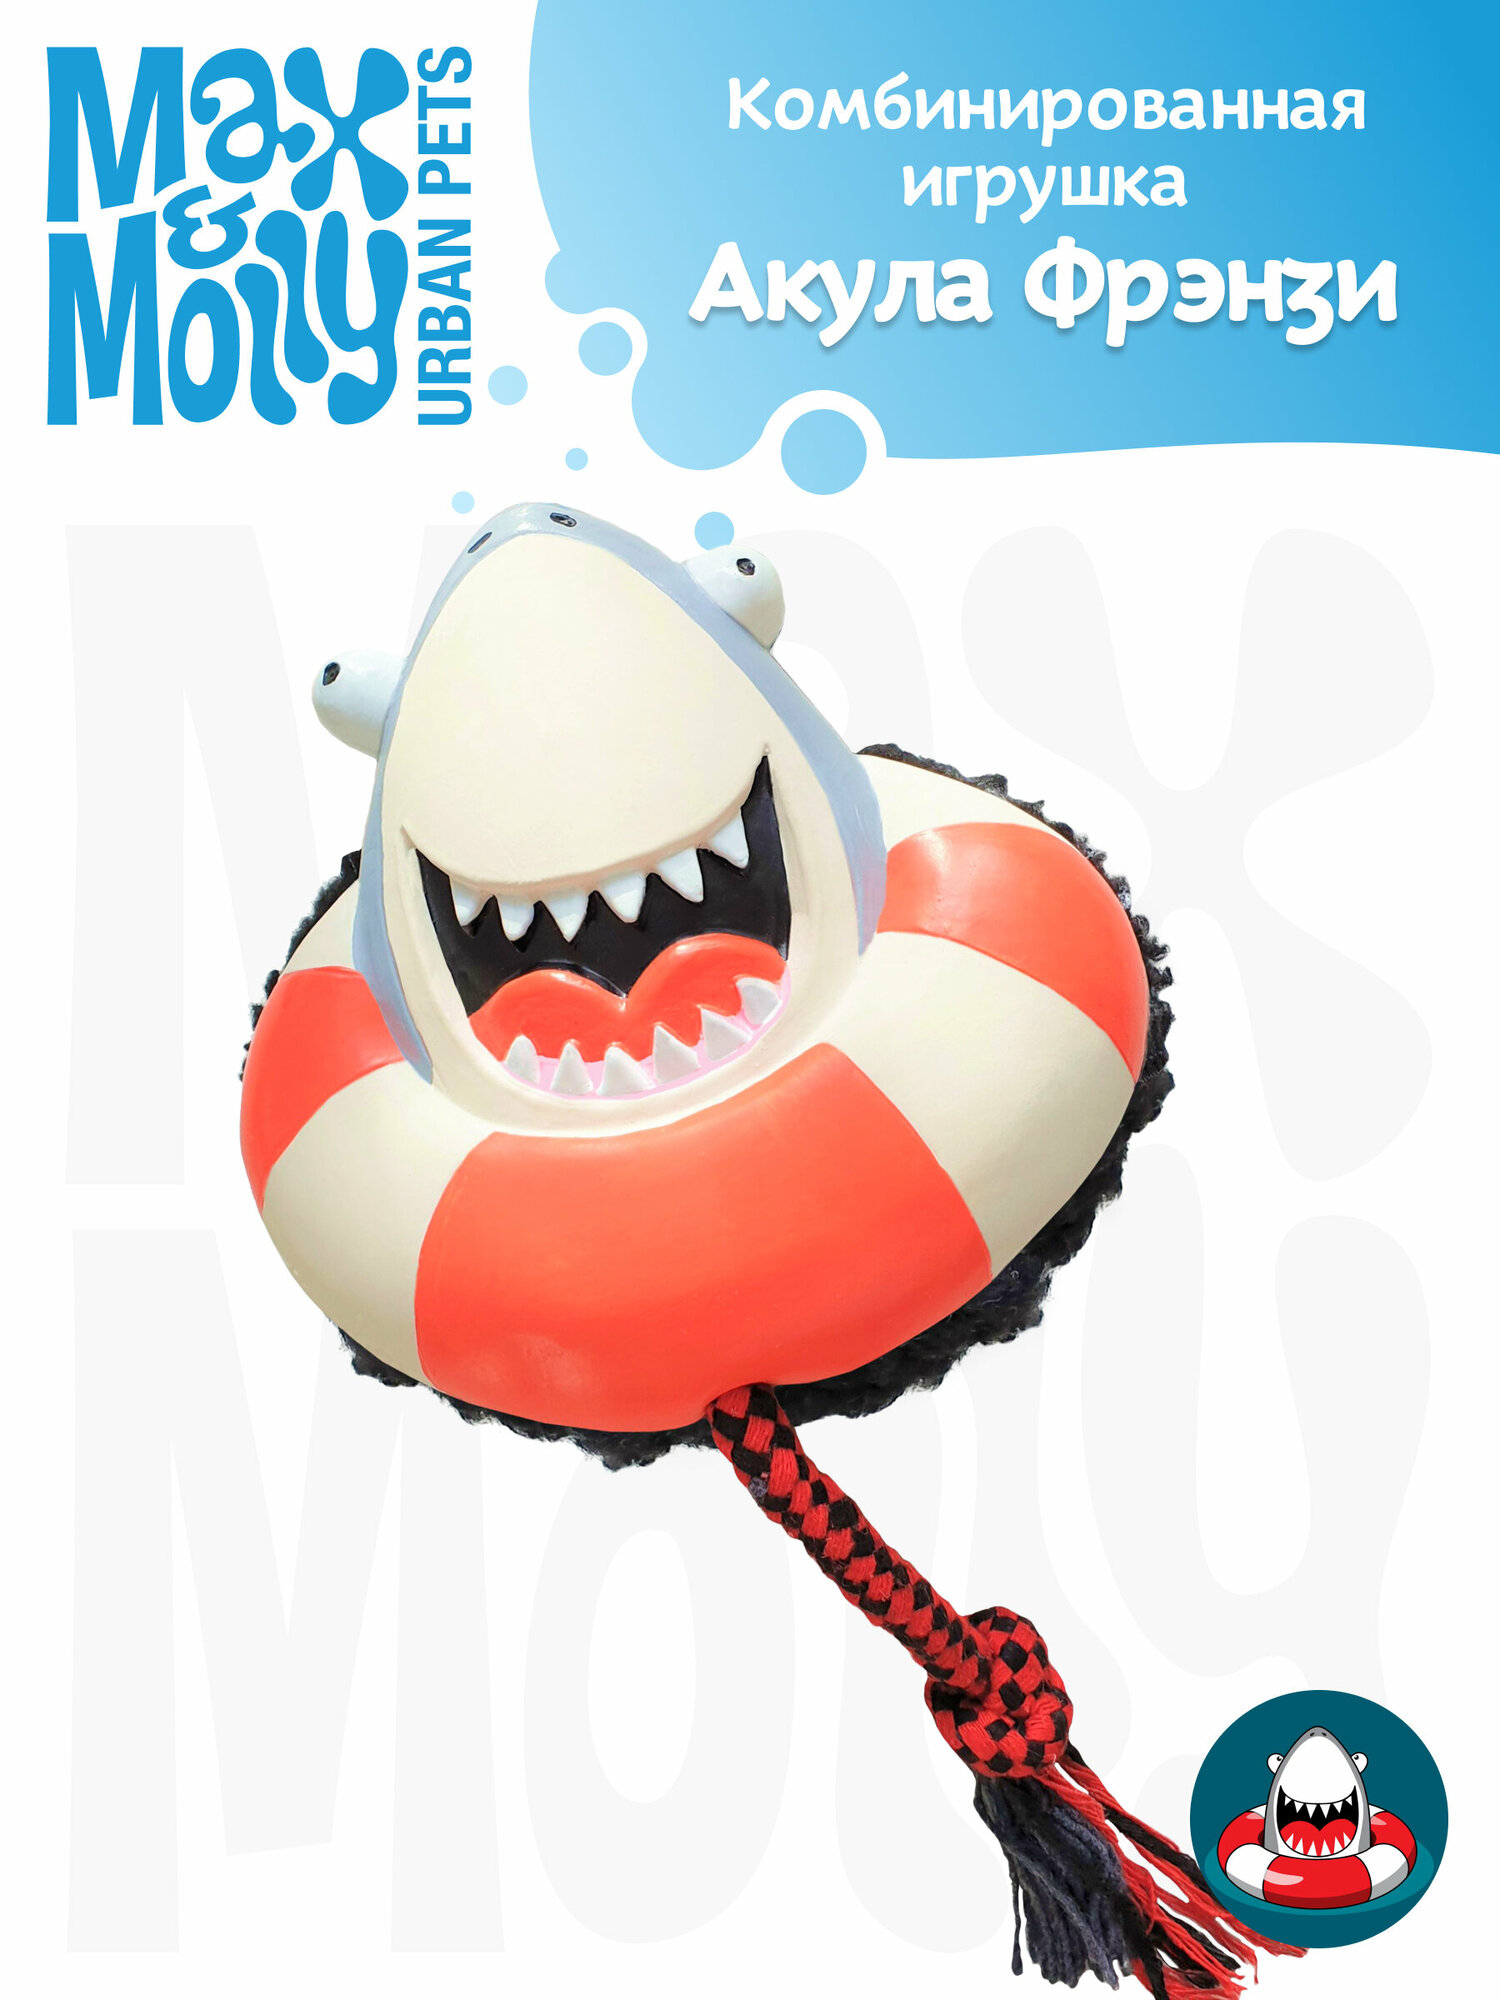 Max & Molly Комбинированная игрушка Акула Фрэнзи, 15 cm x 14.5m x 6.5 cm